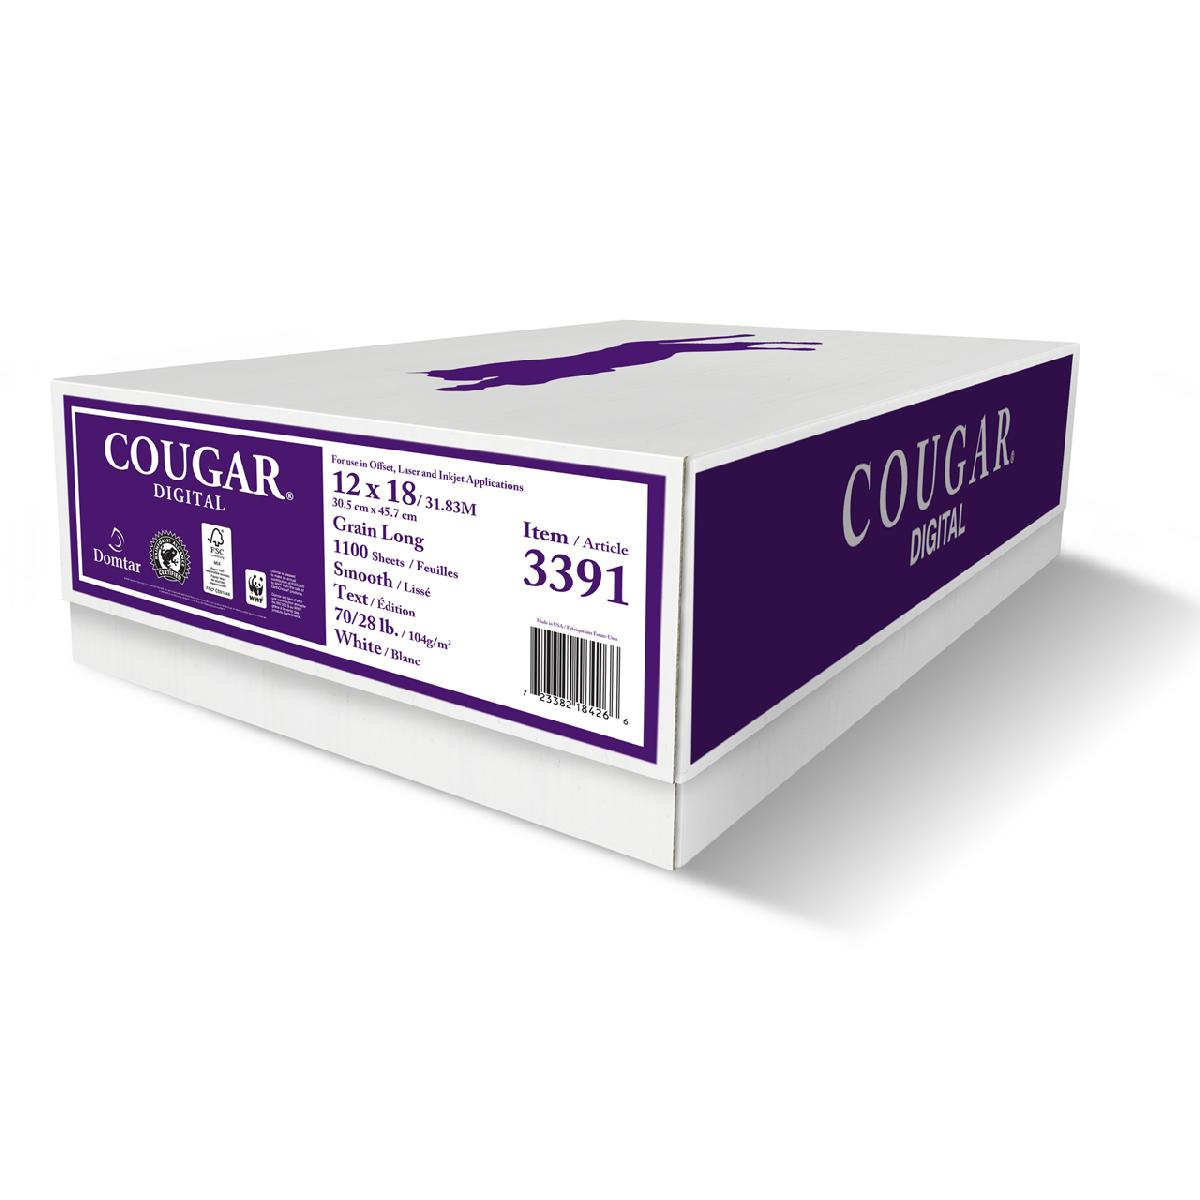 Domtar Cougar® Digital Natural Smooth 100 lb. Cover 18x12 in. 400 Sheets per Carton